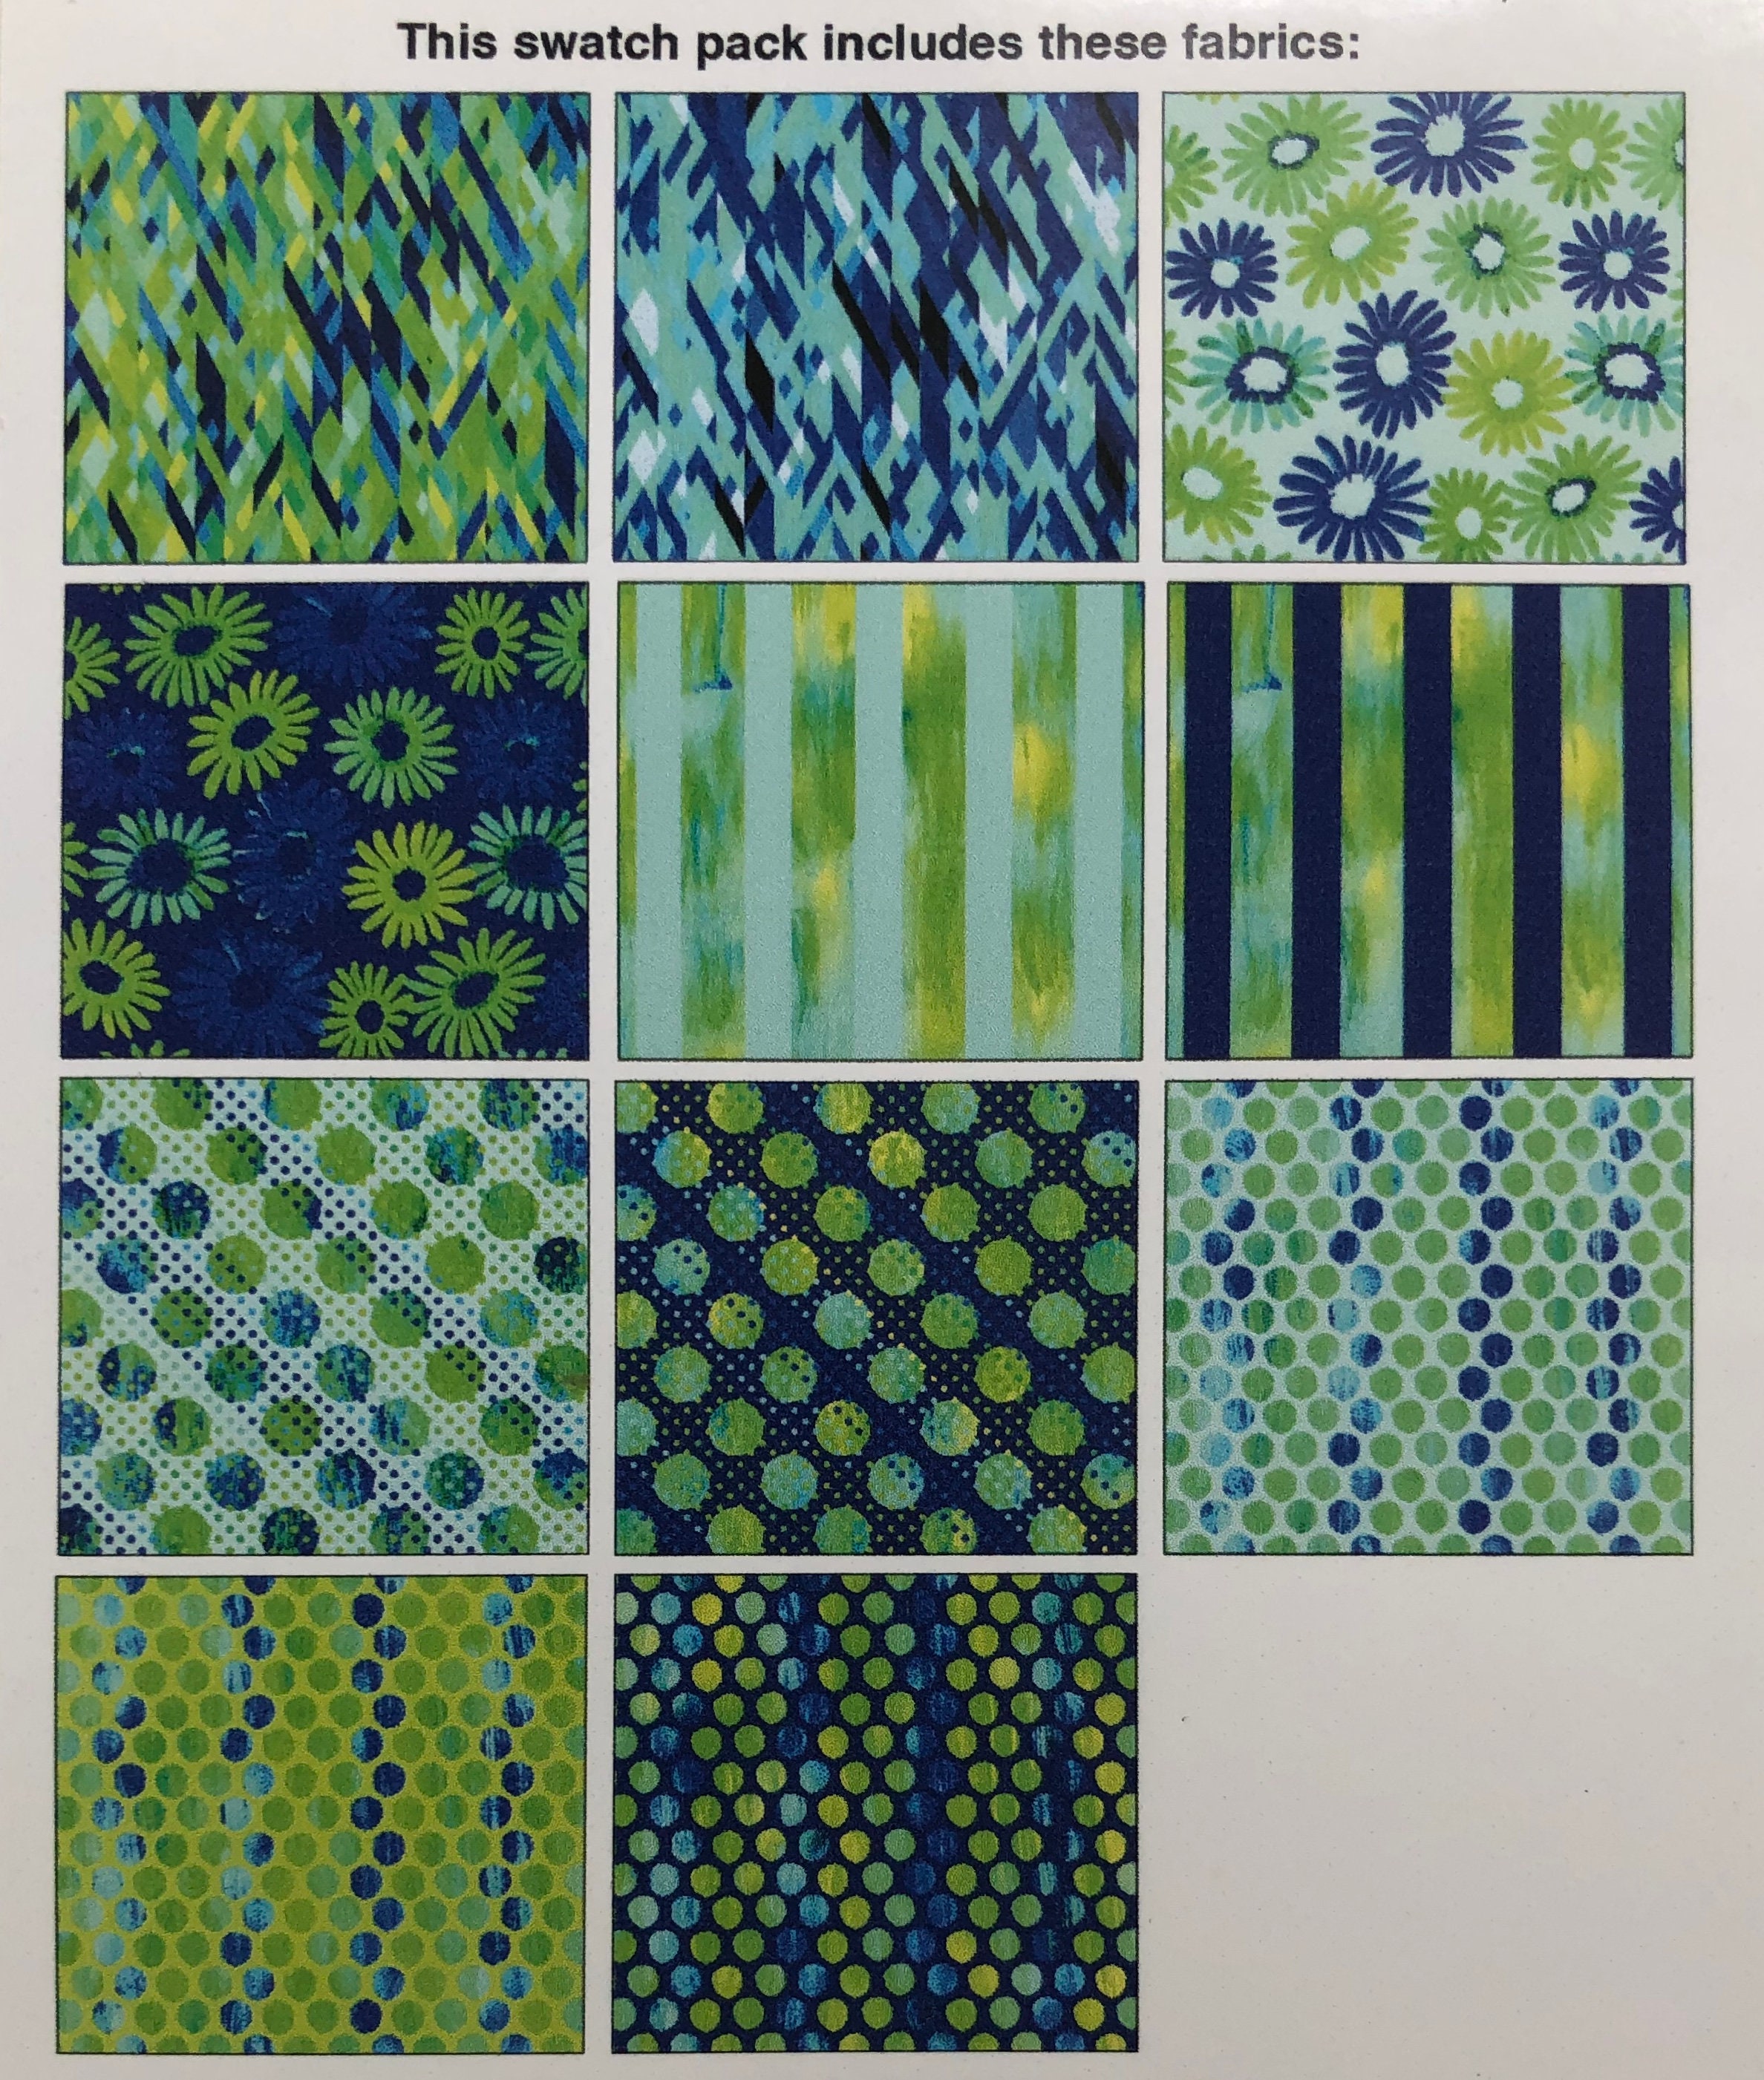 Chris.W 35Pcs Quilting Fabric Squares Sheets, 10x10 Cotton Craft